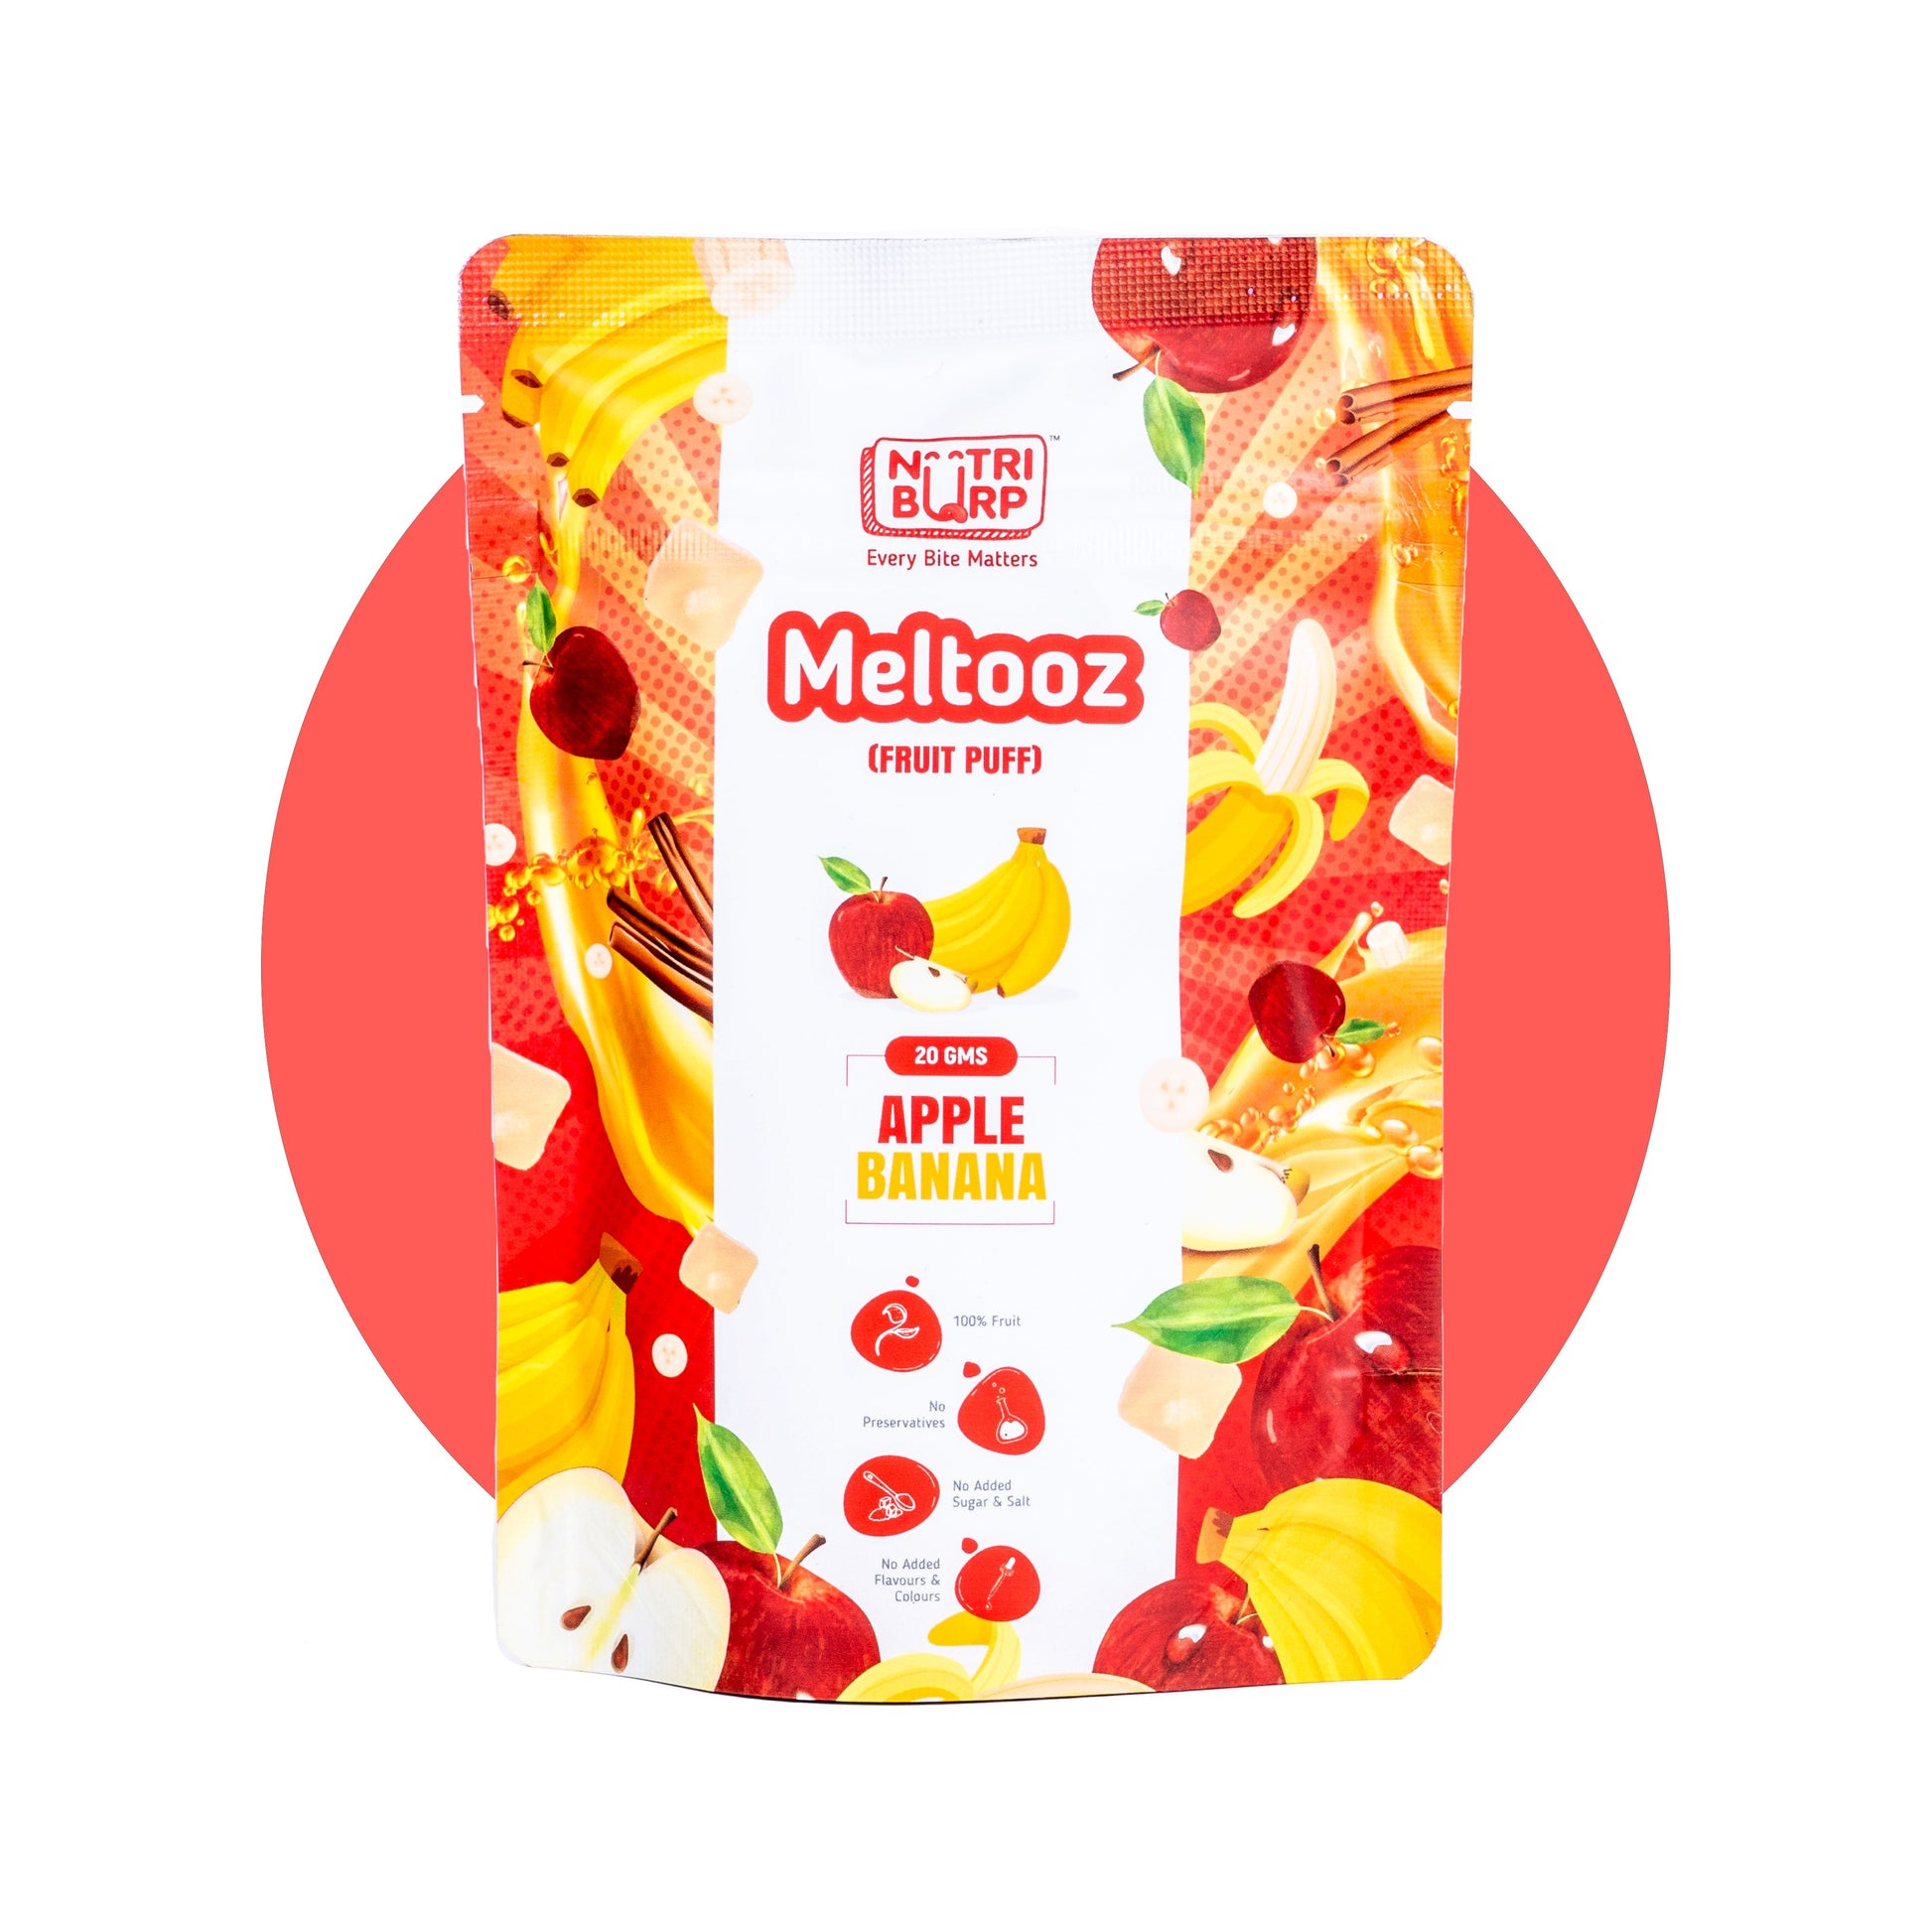 Apple Banana Meltooz (20g each) - Ideal for 9 Months+ Baby & Toddler Food nutriburp Pack of 1 